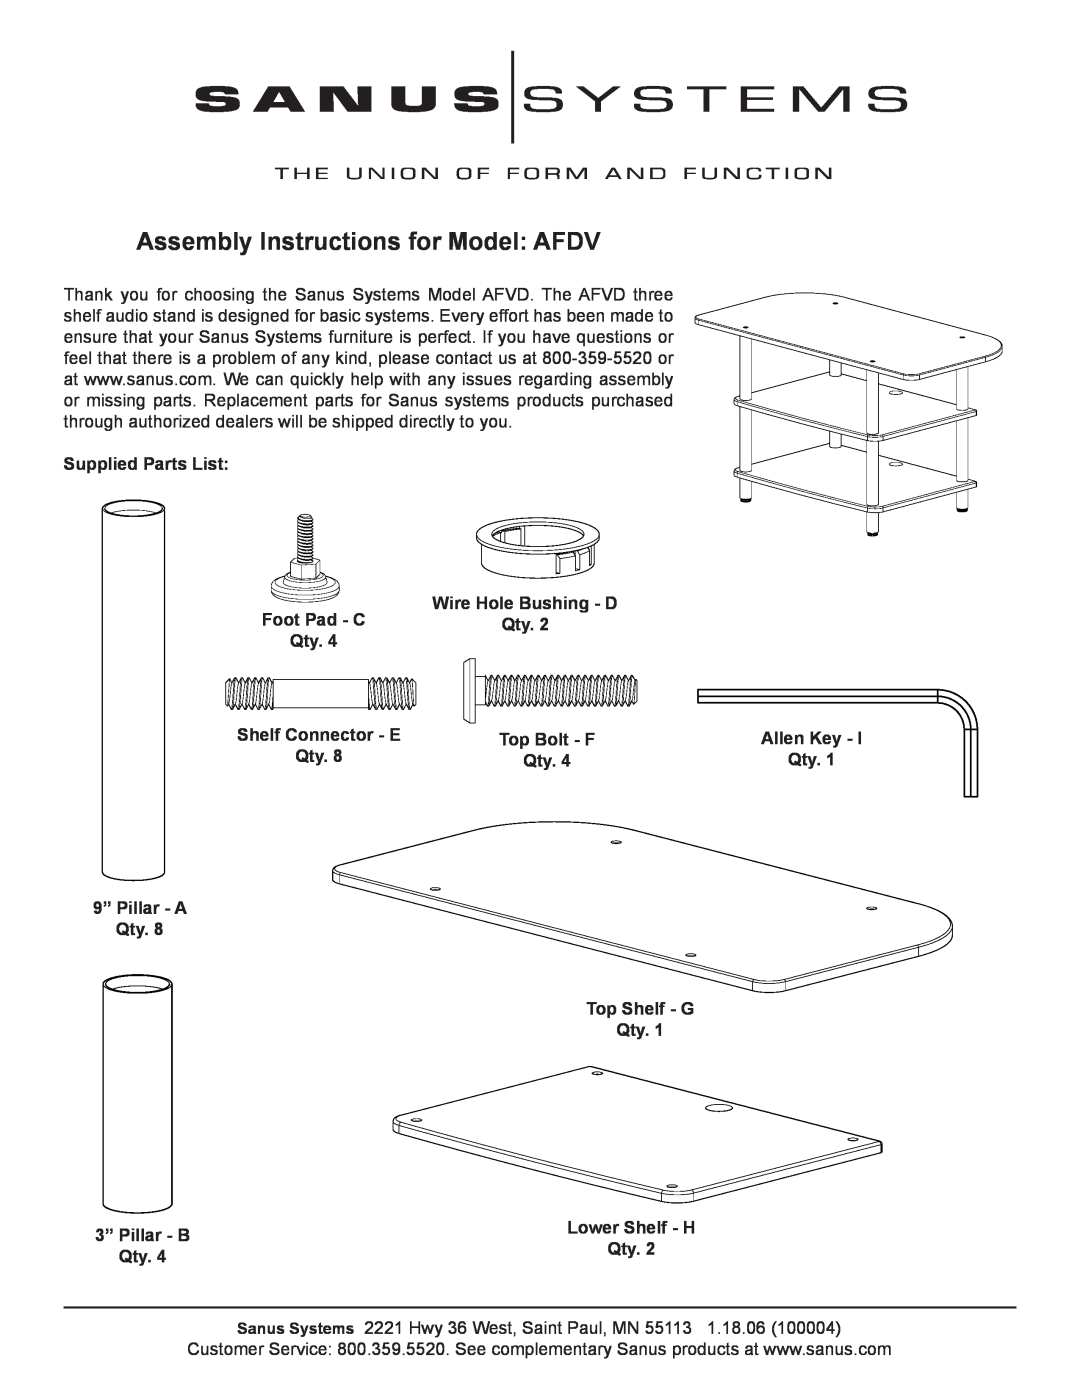 Sanus Systems AFDV manual Supplied Parts List, 9” Pillar - A Qty. 3” Pillar - B Qty, Wire Hole Bushing - D Qty 